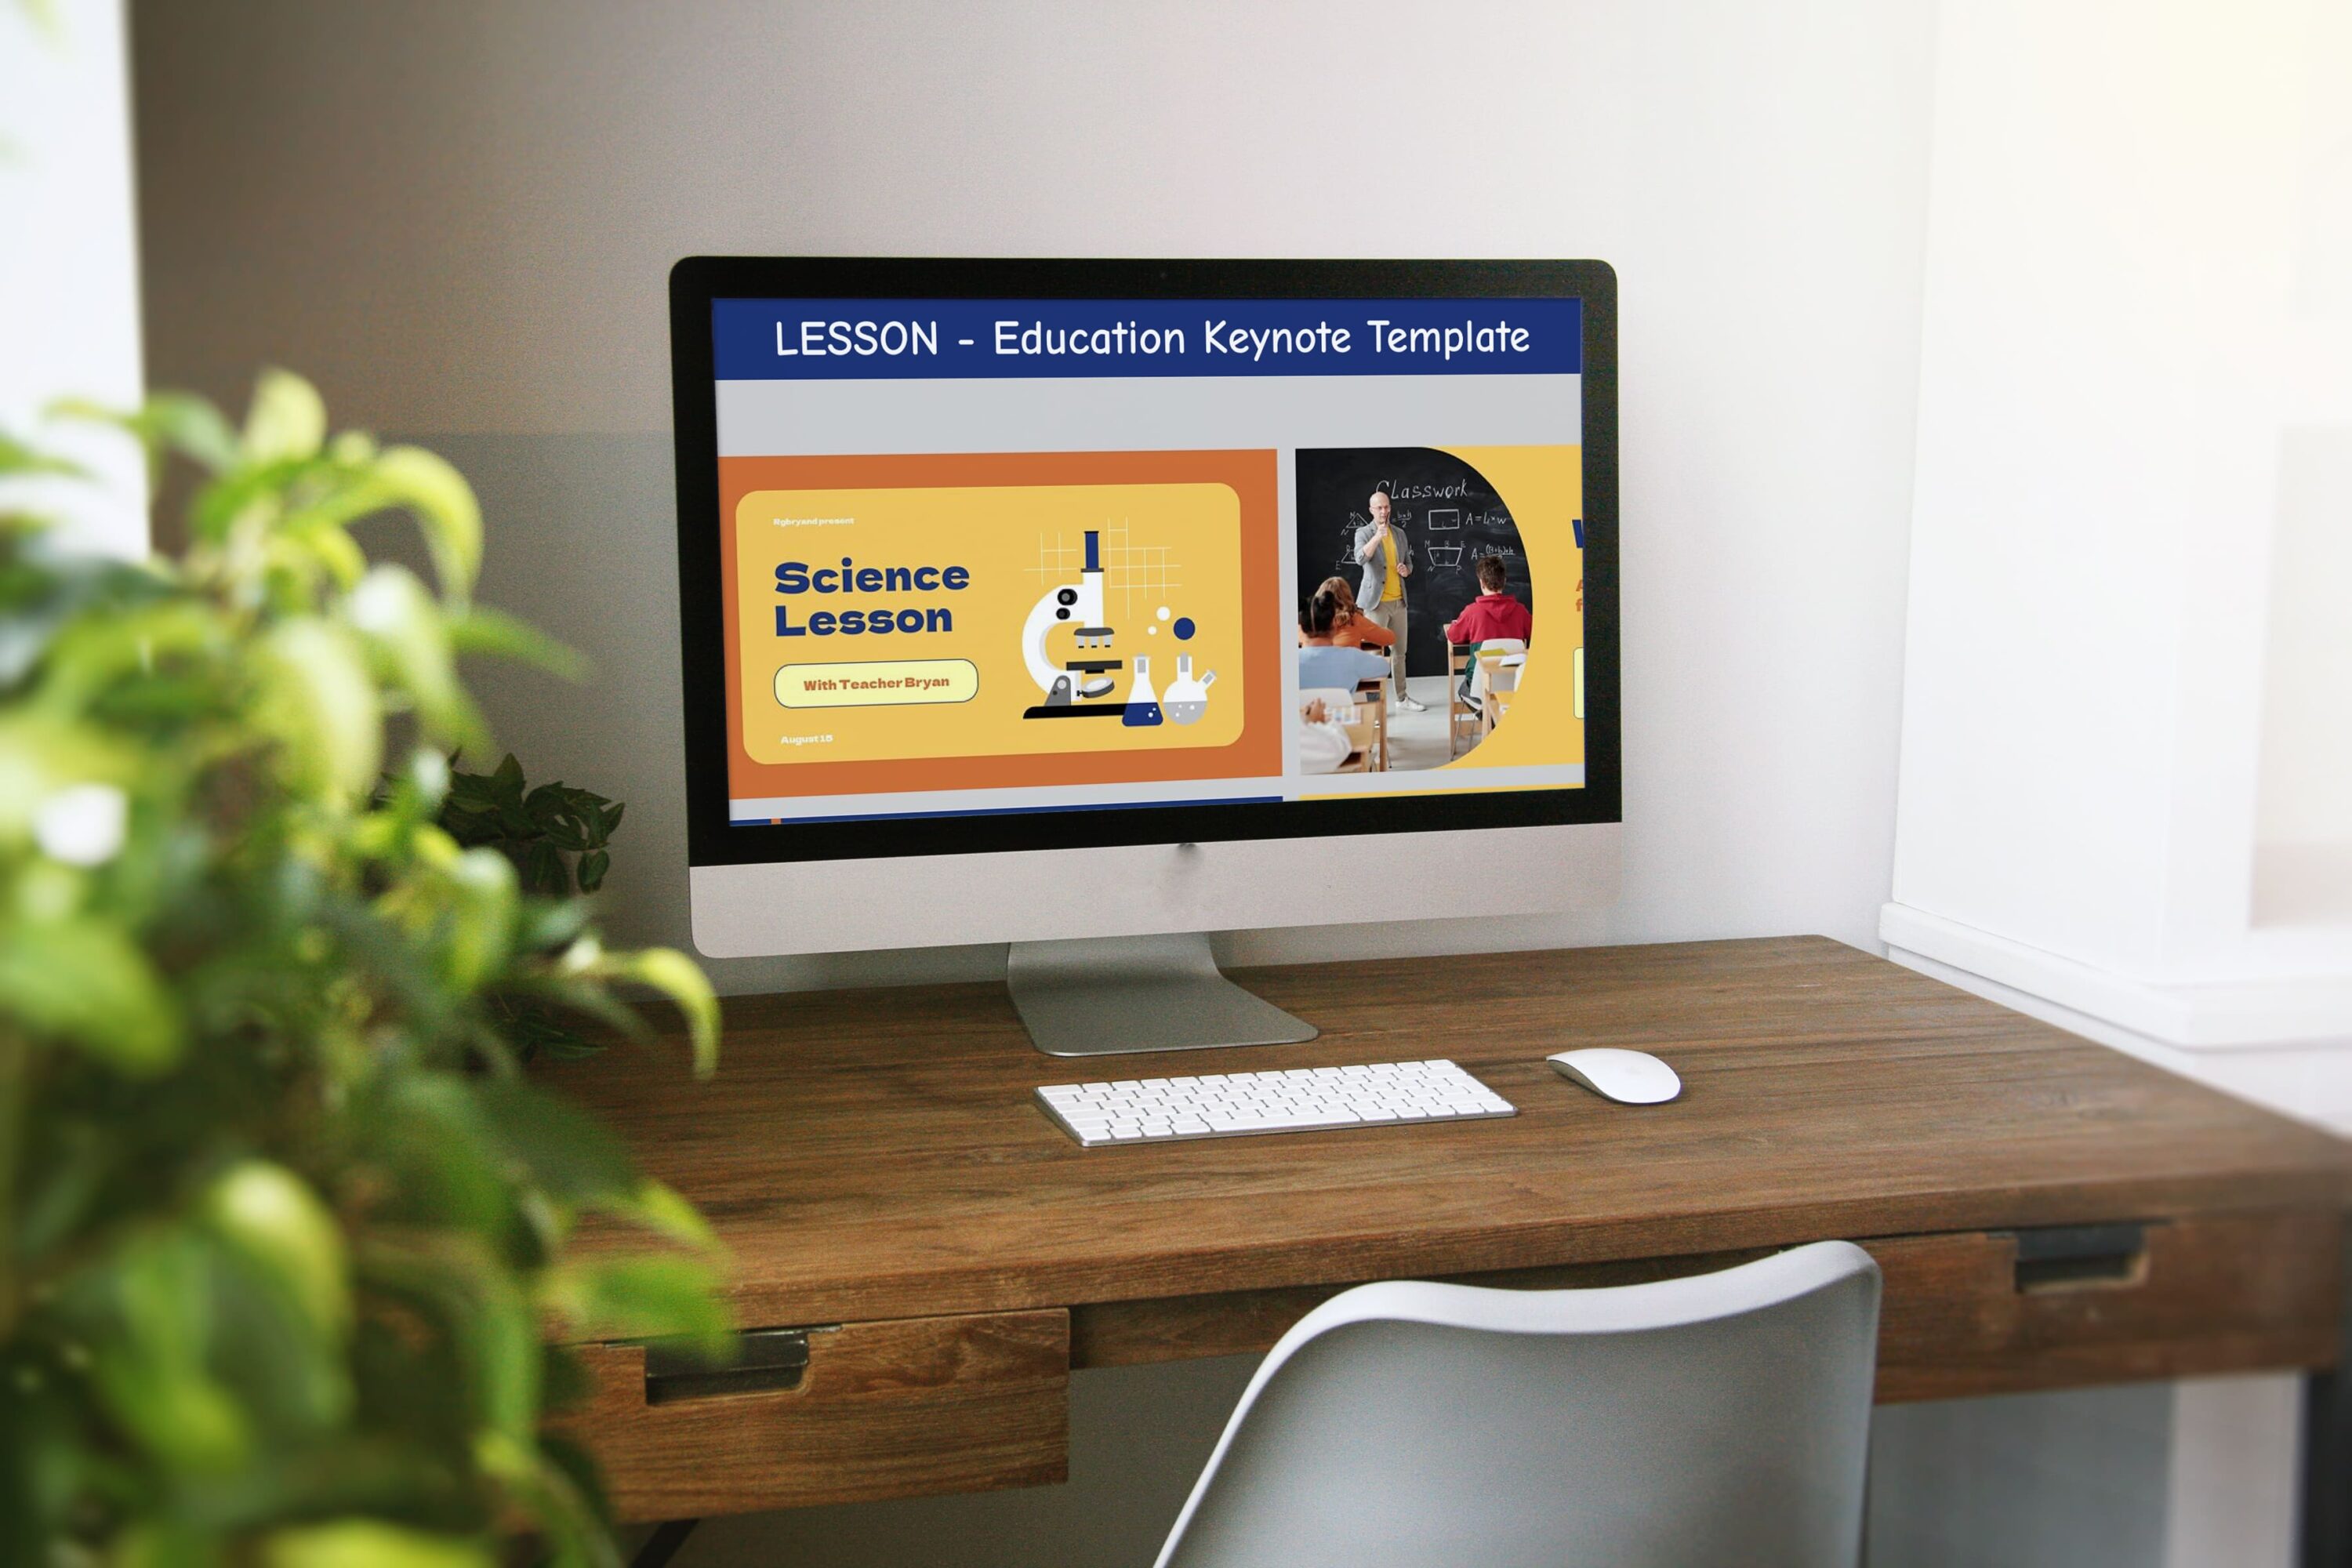 LESSON - Education Keynote Template - desktop.